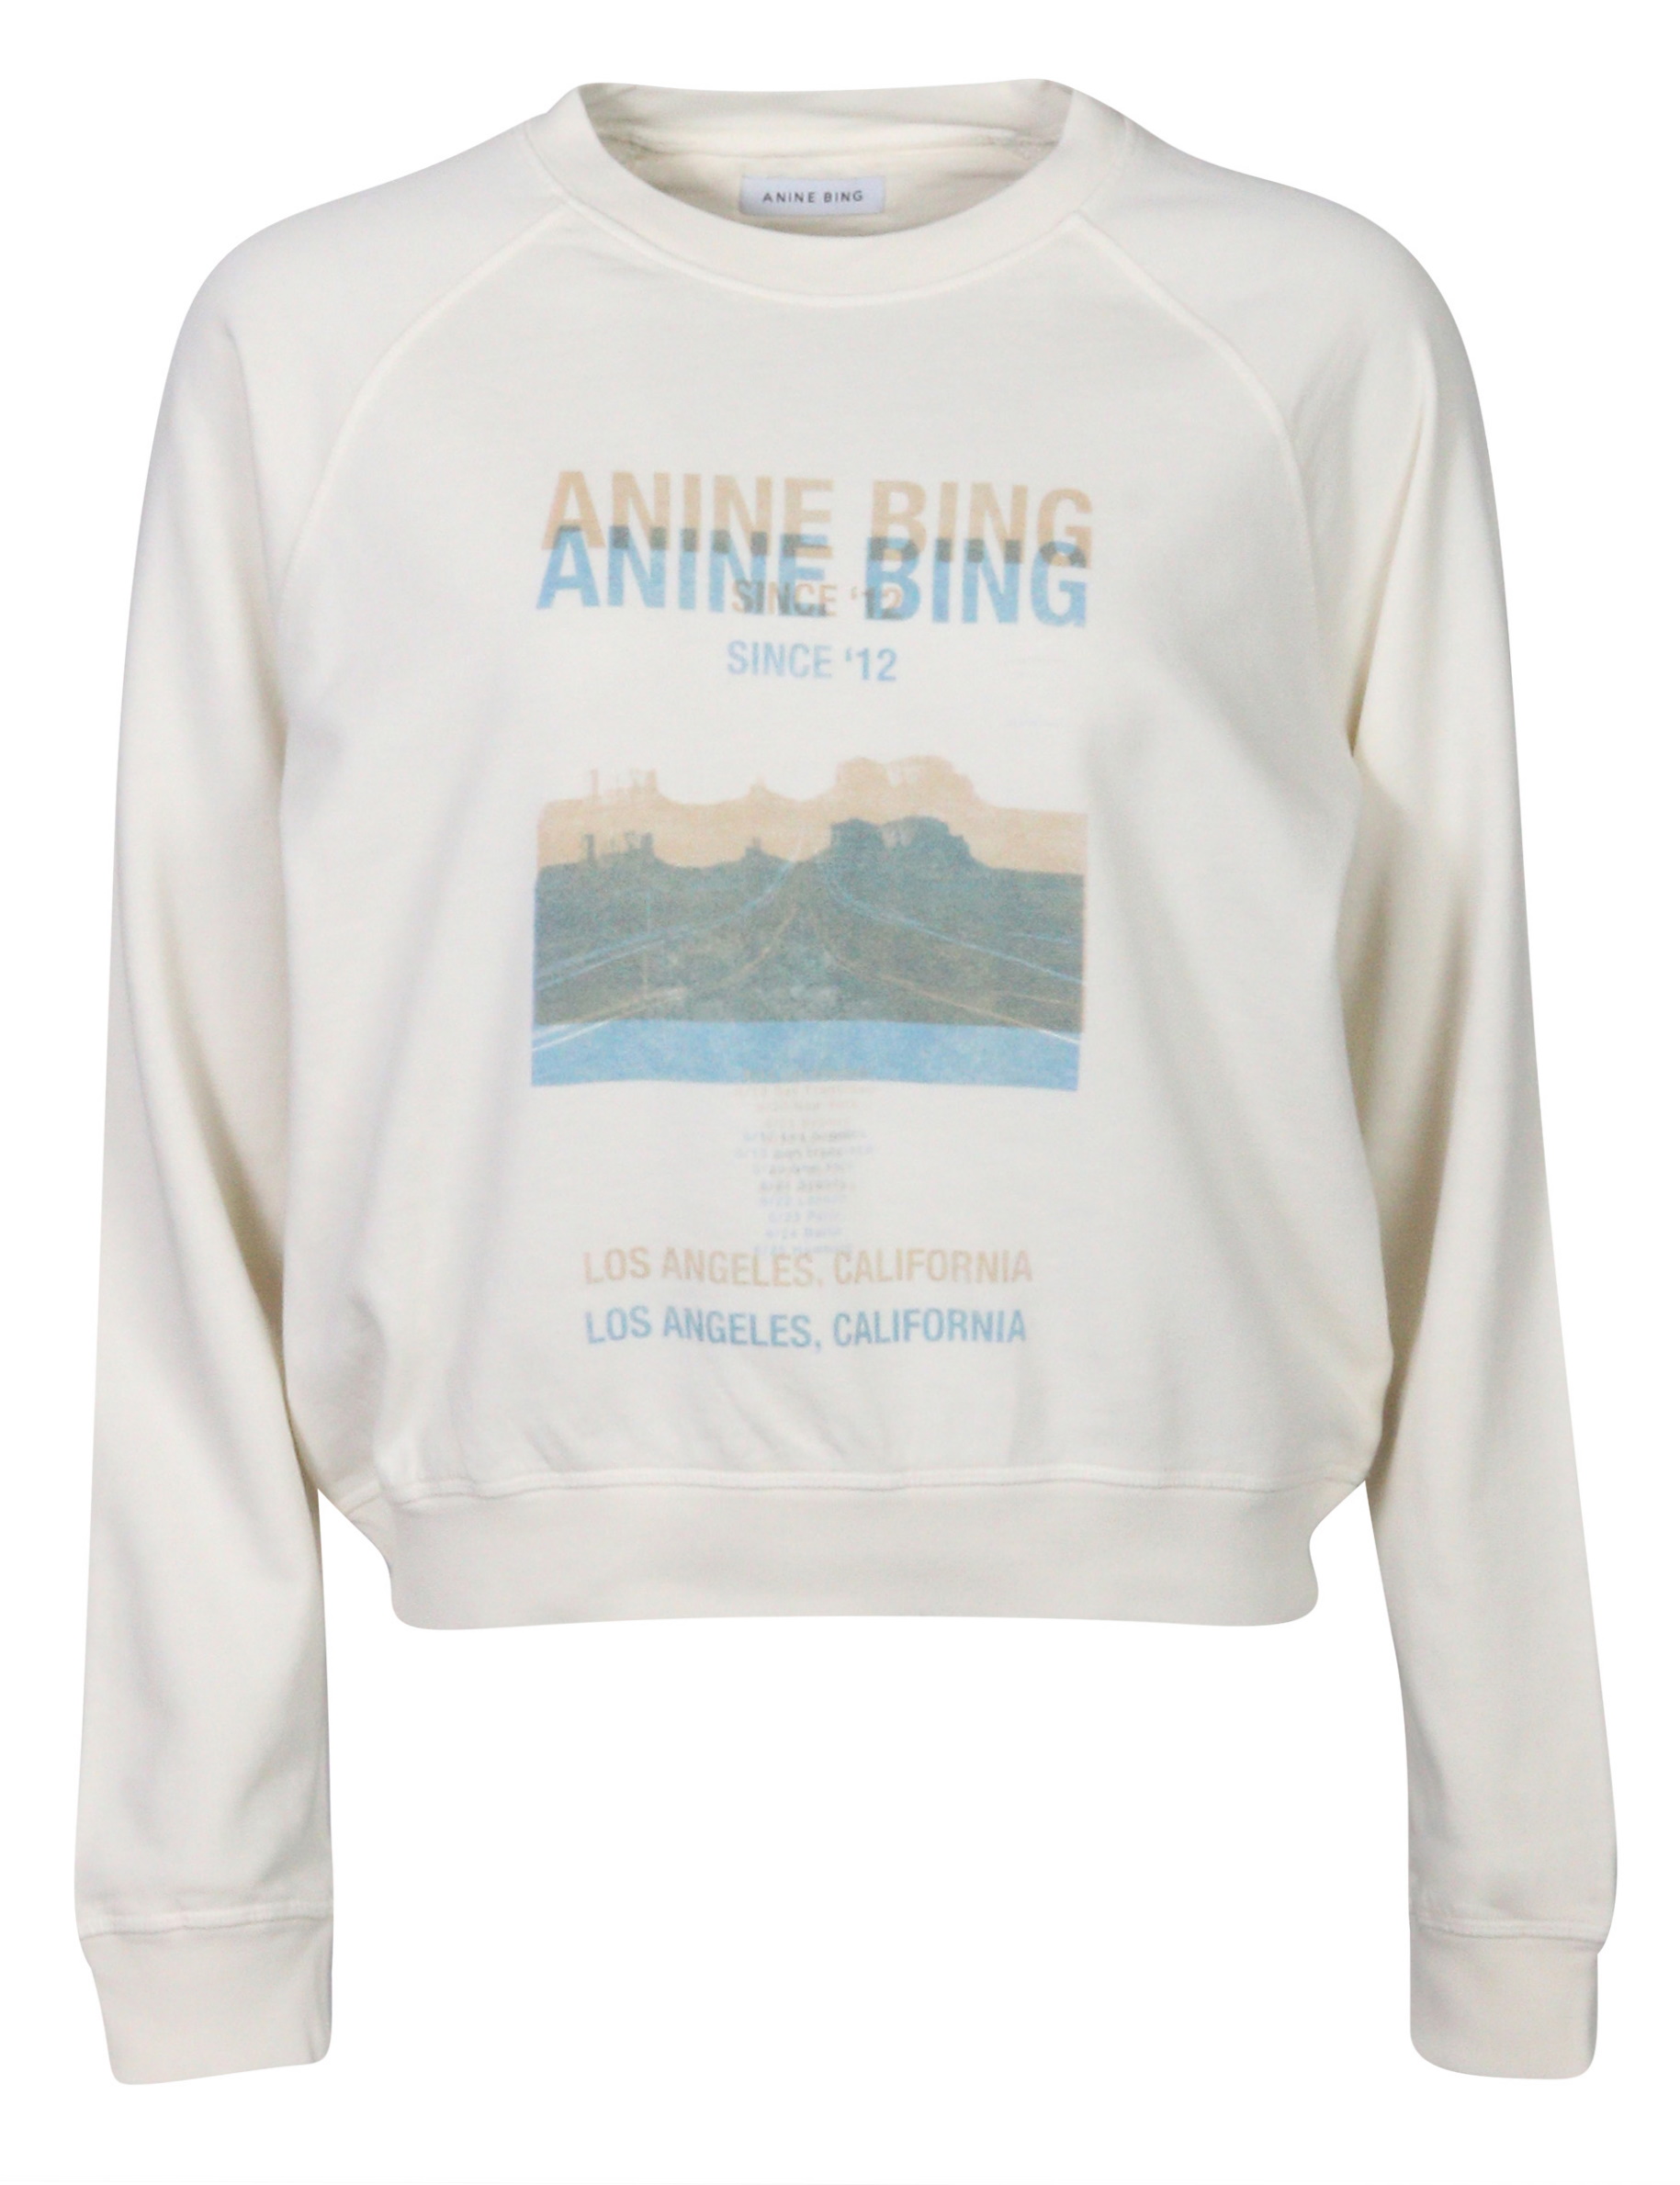 Anine Bing Sweatshirt Ecru Printed L